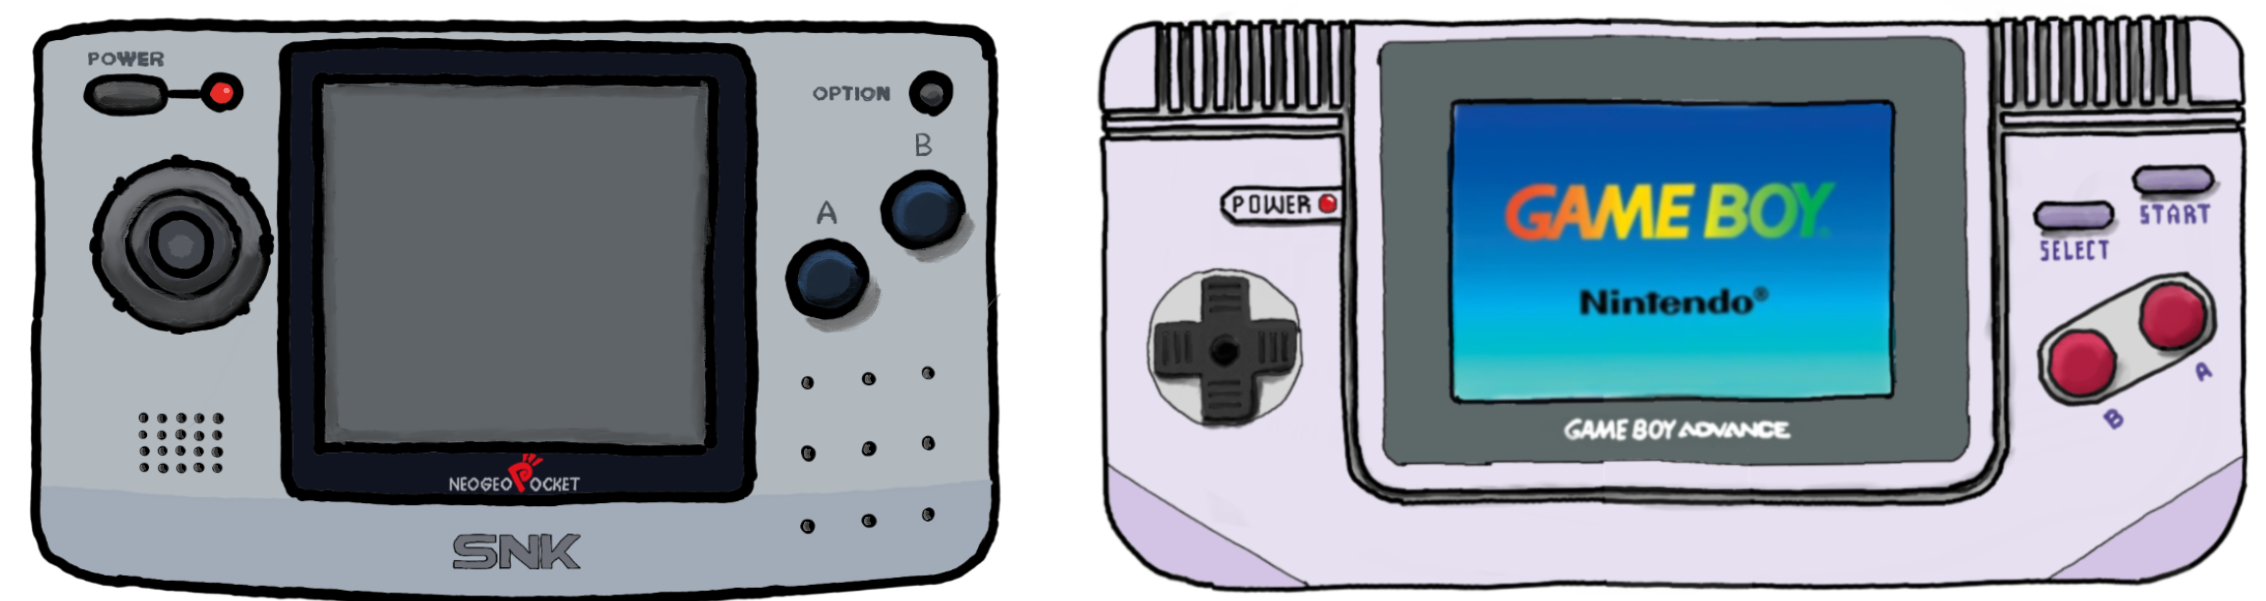 Game Boy Advance прототип VS Neo Geo Pocket